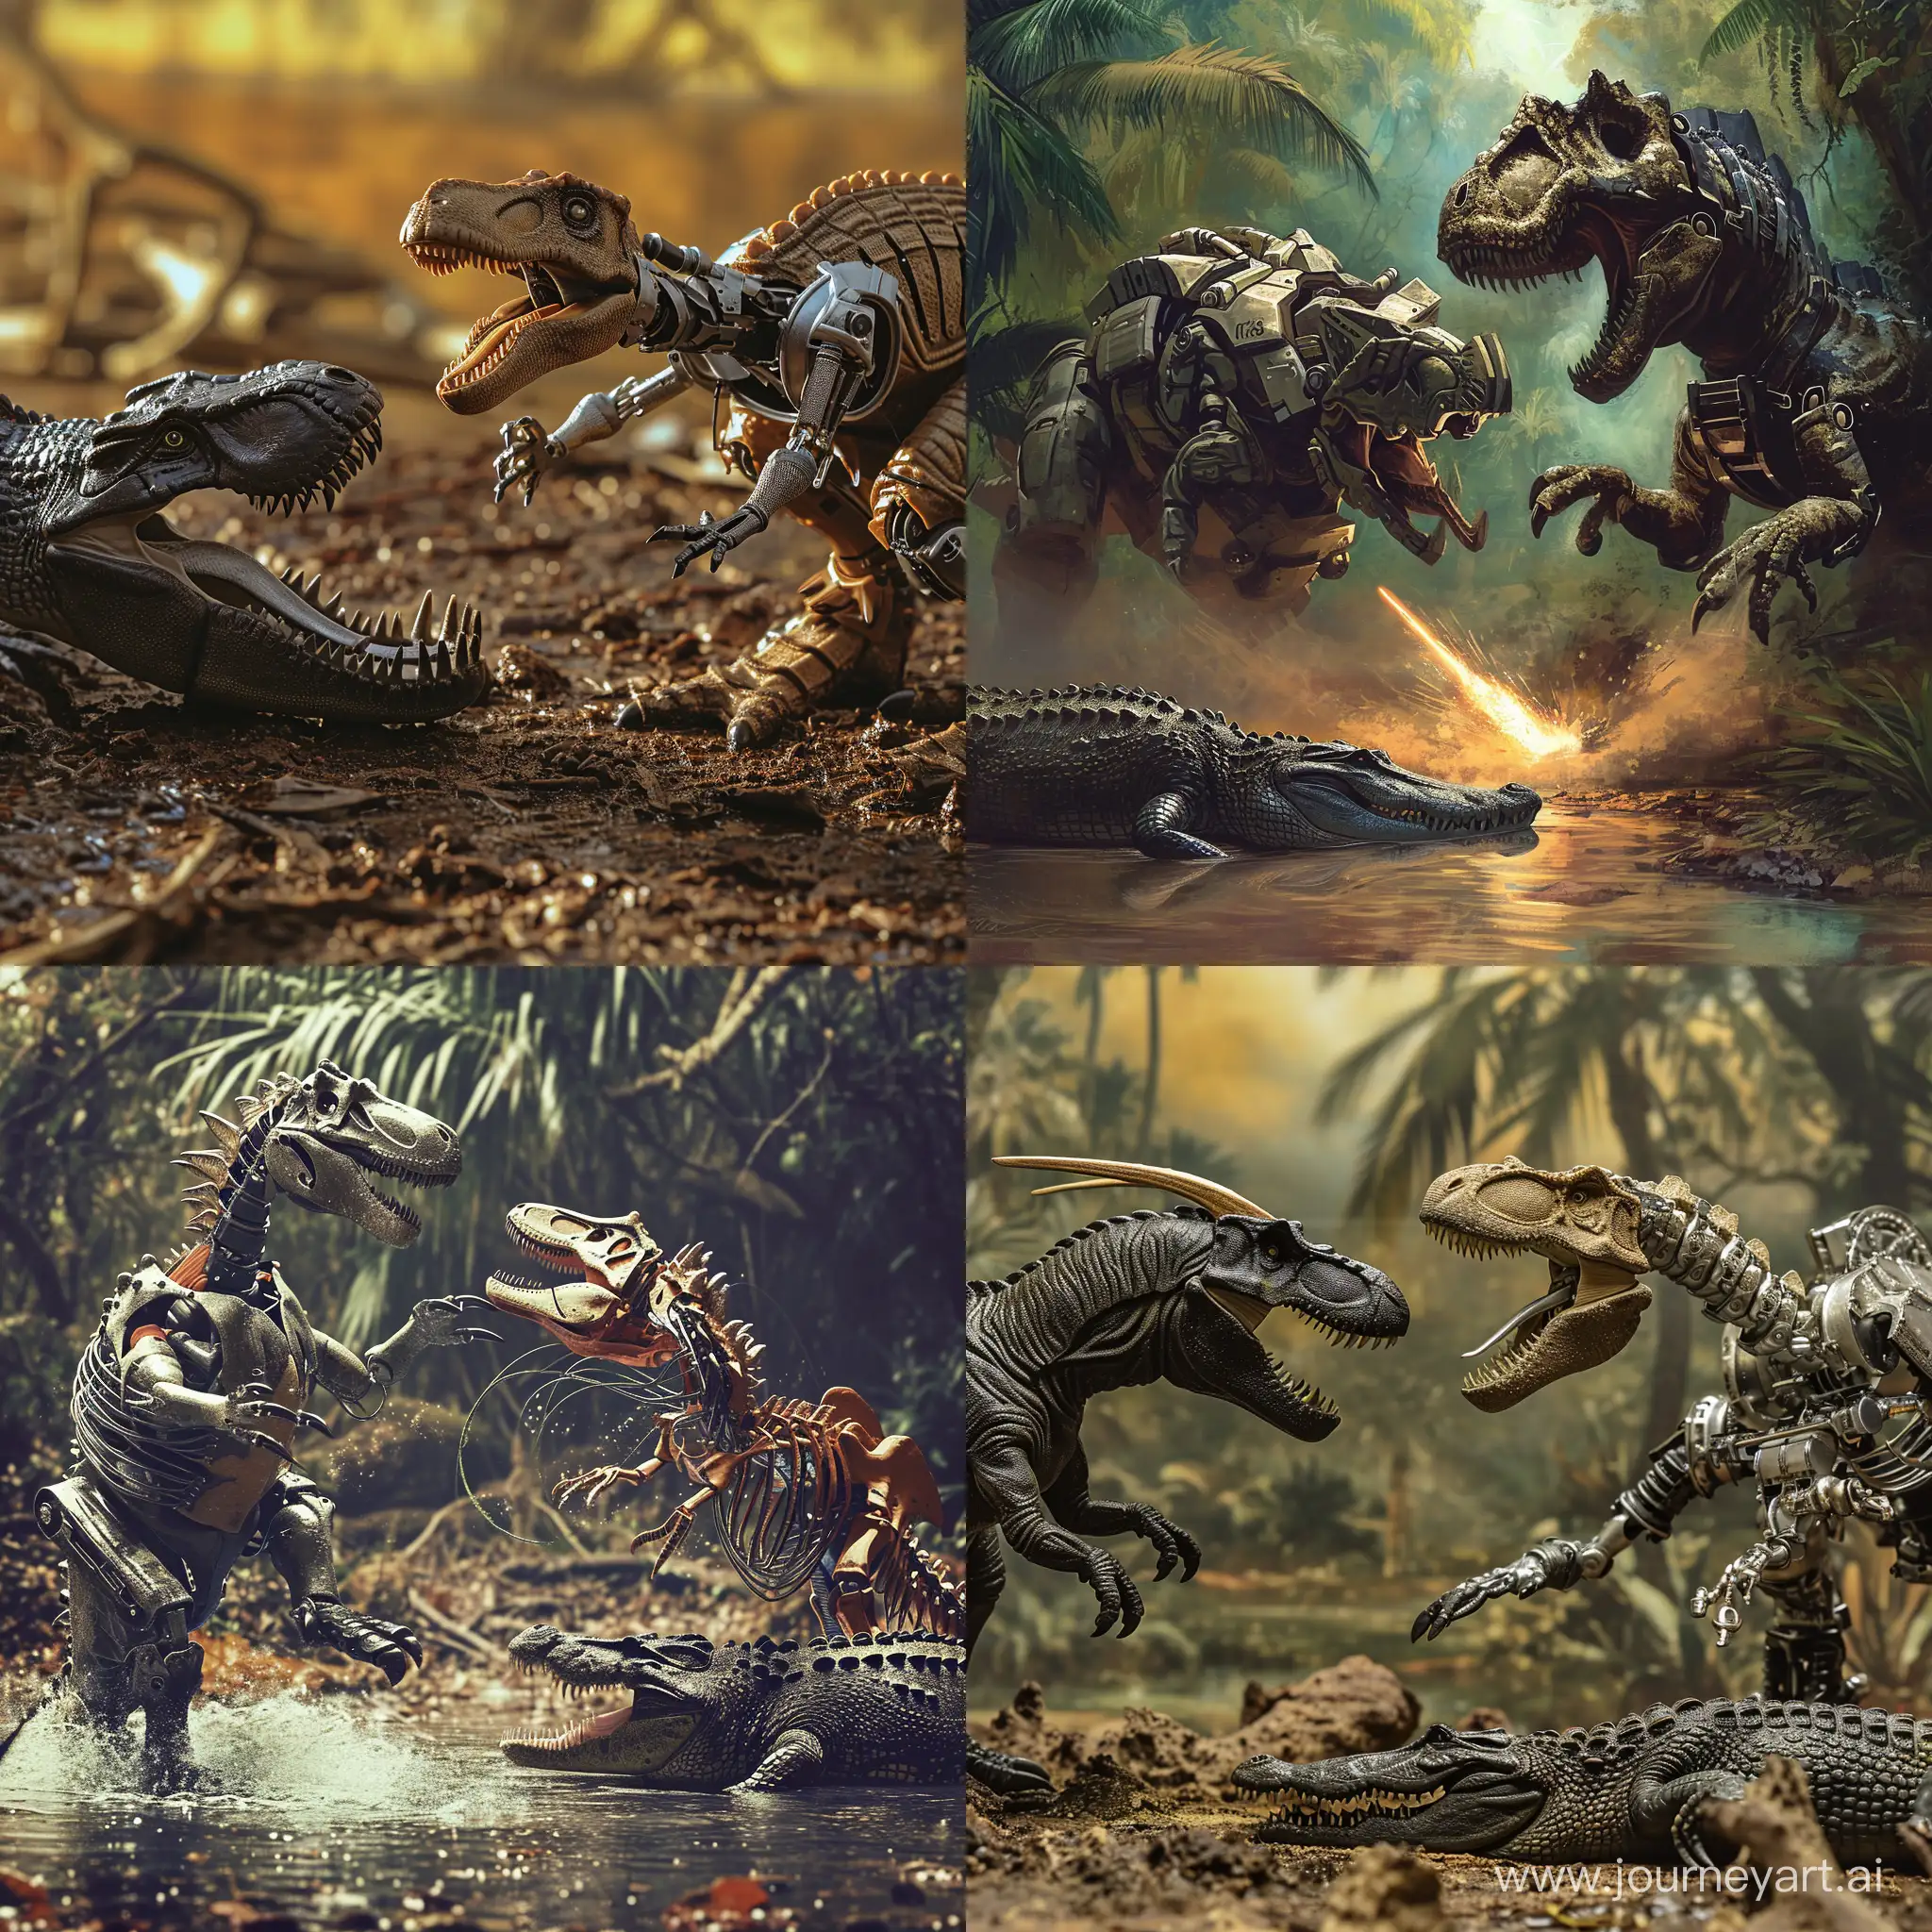 Epic-Mechanical-Dinosaur-vs-Crocodile-Battle-in-Square-Format